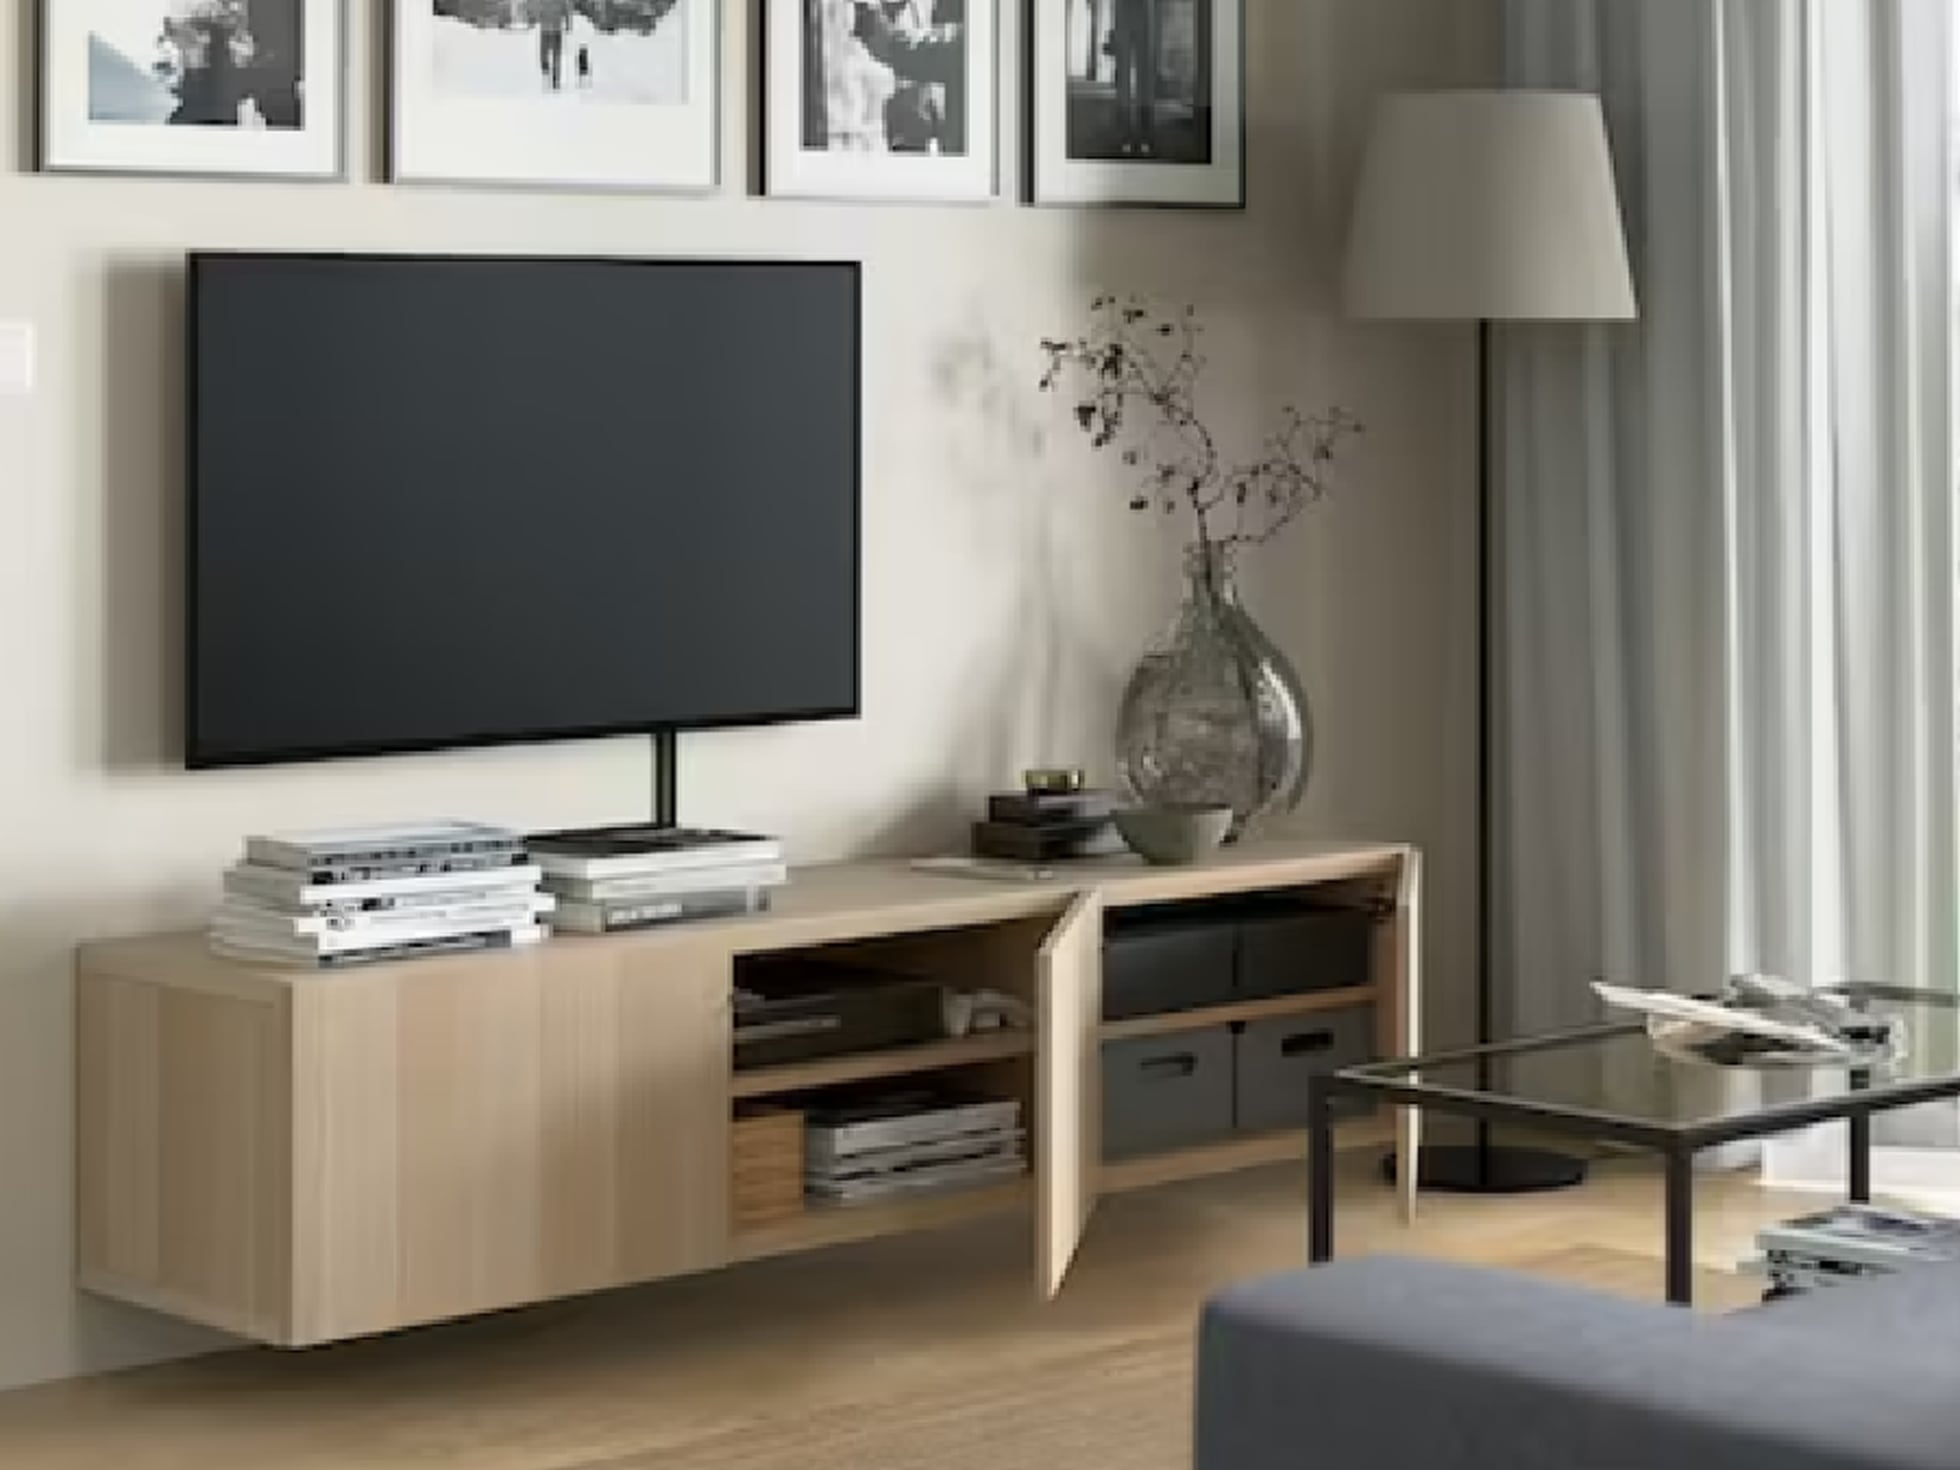 Muebles de Salón Modernos - Compra Online - IKEA